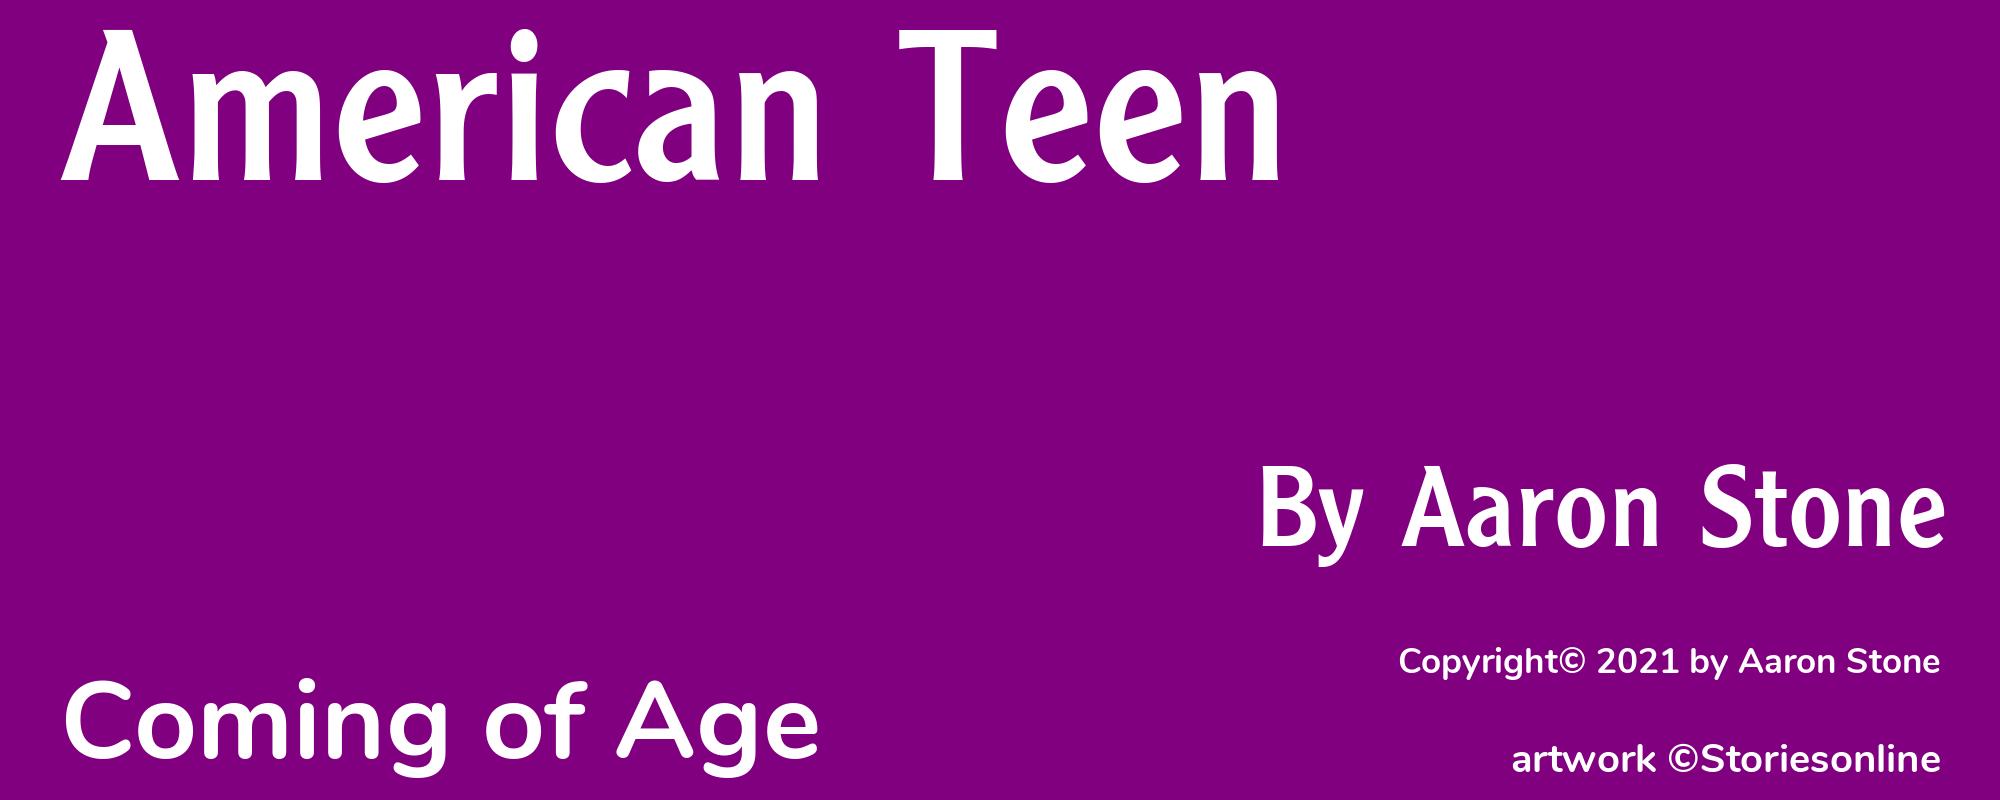 American Teen - Cover